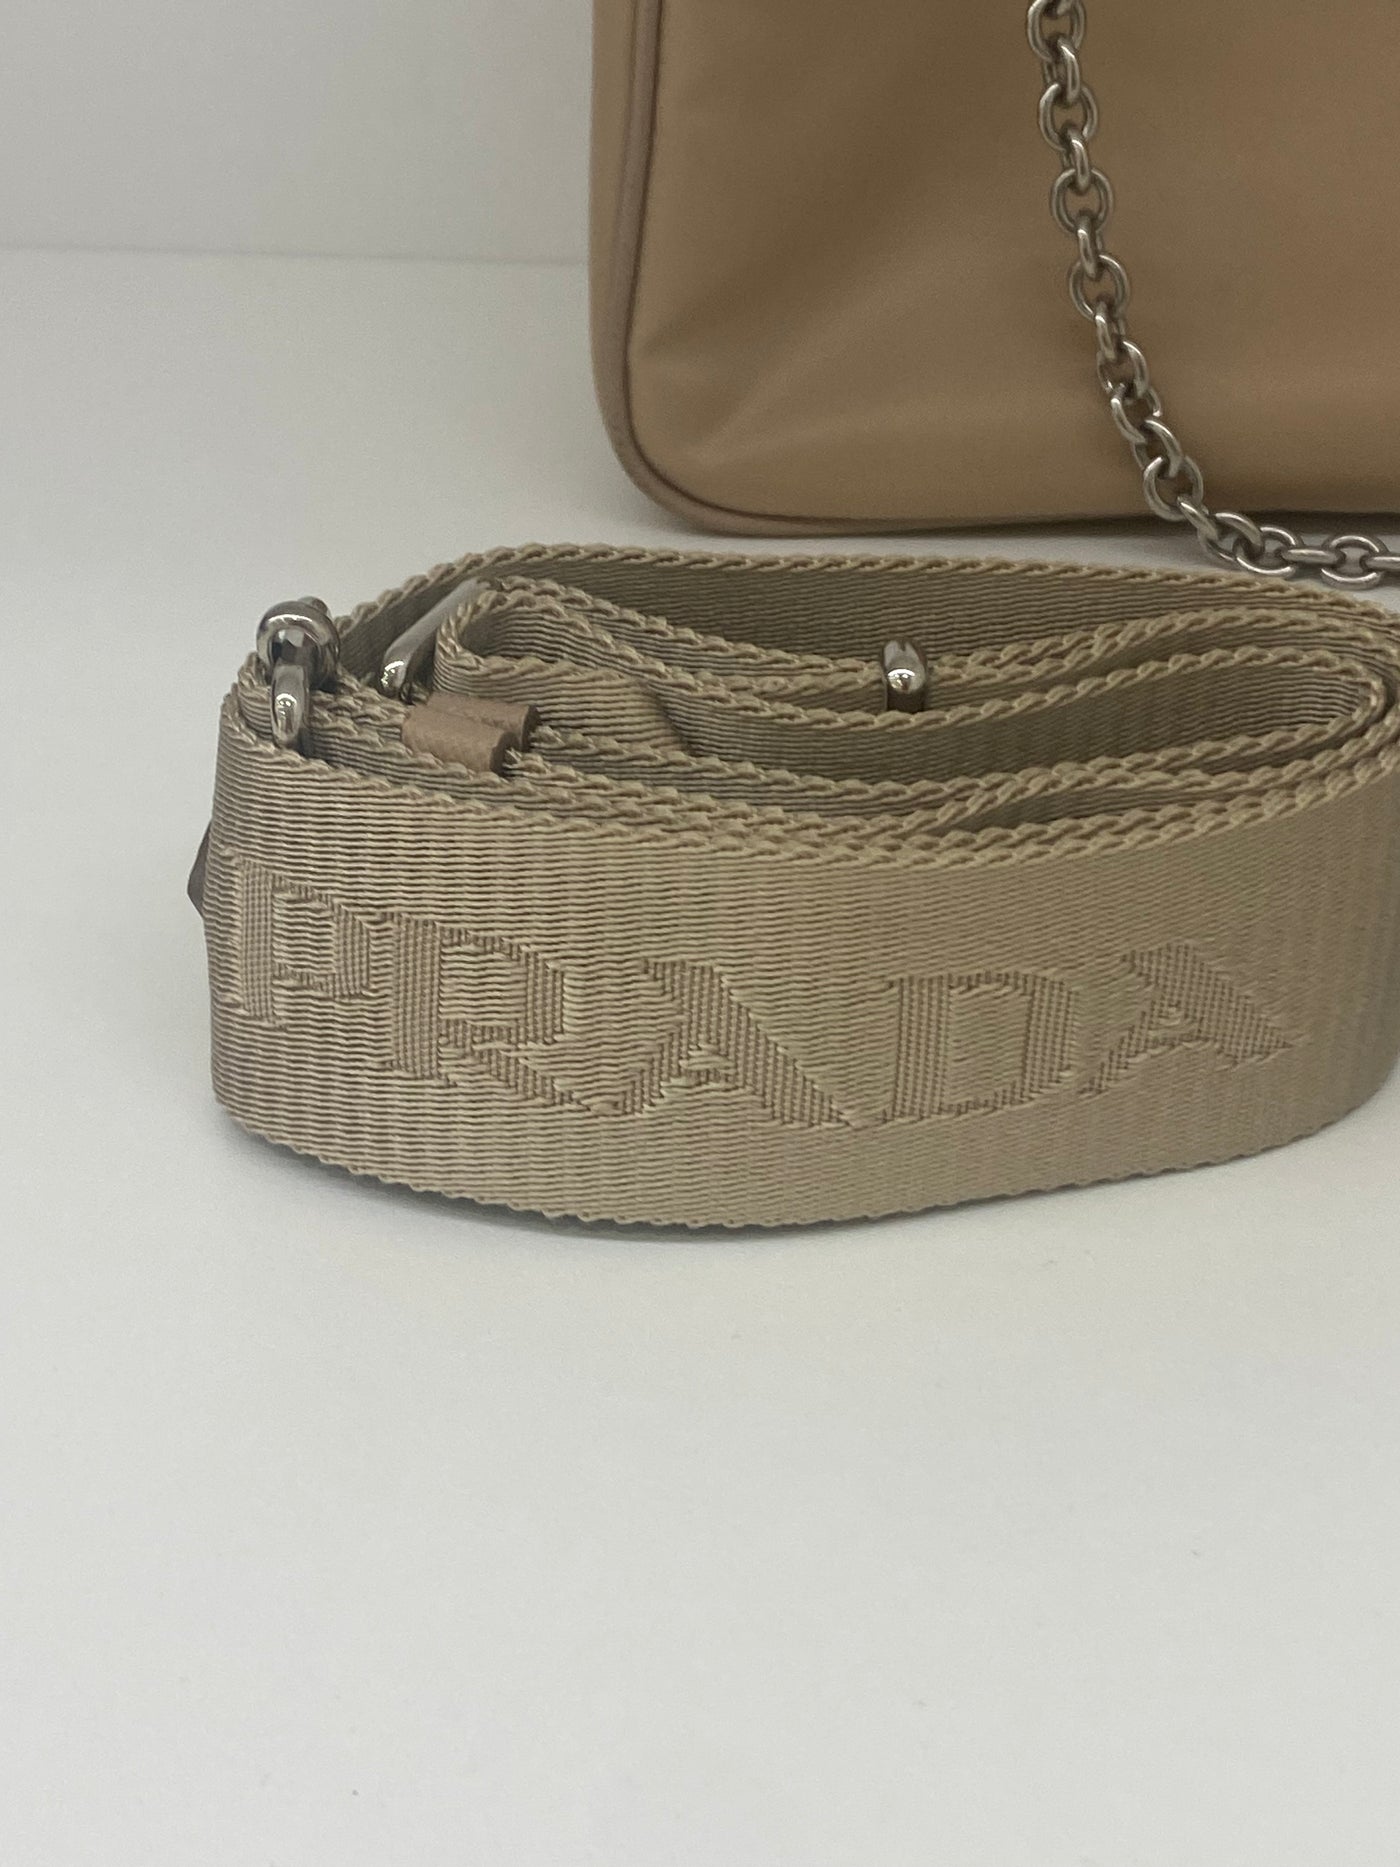 Prada Re Edition Nylon Beige Bag